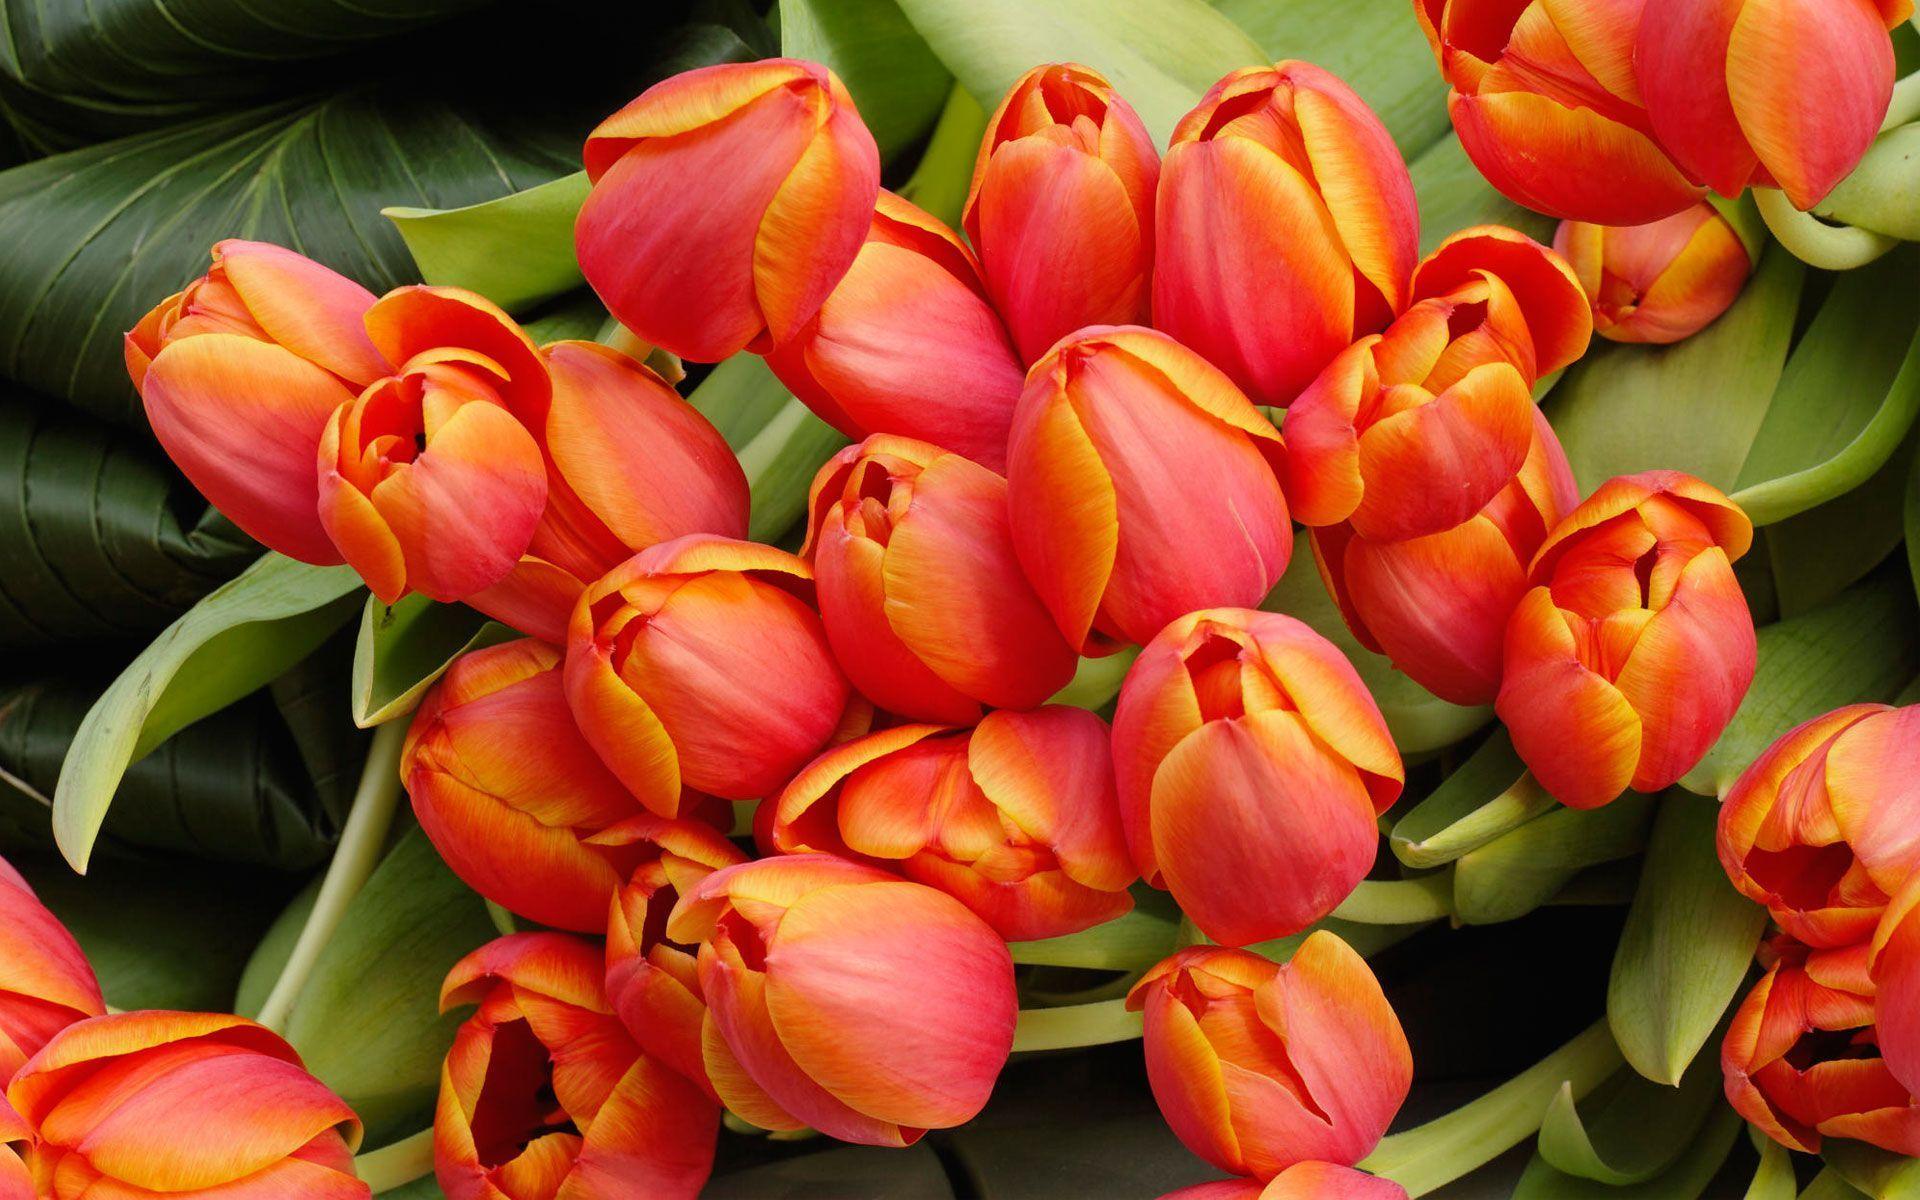 Tulips Flower Wallpaper For Your Desktop Background